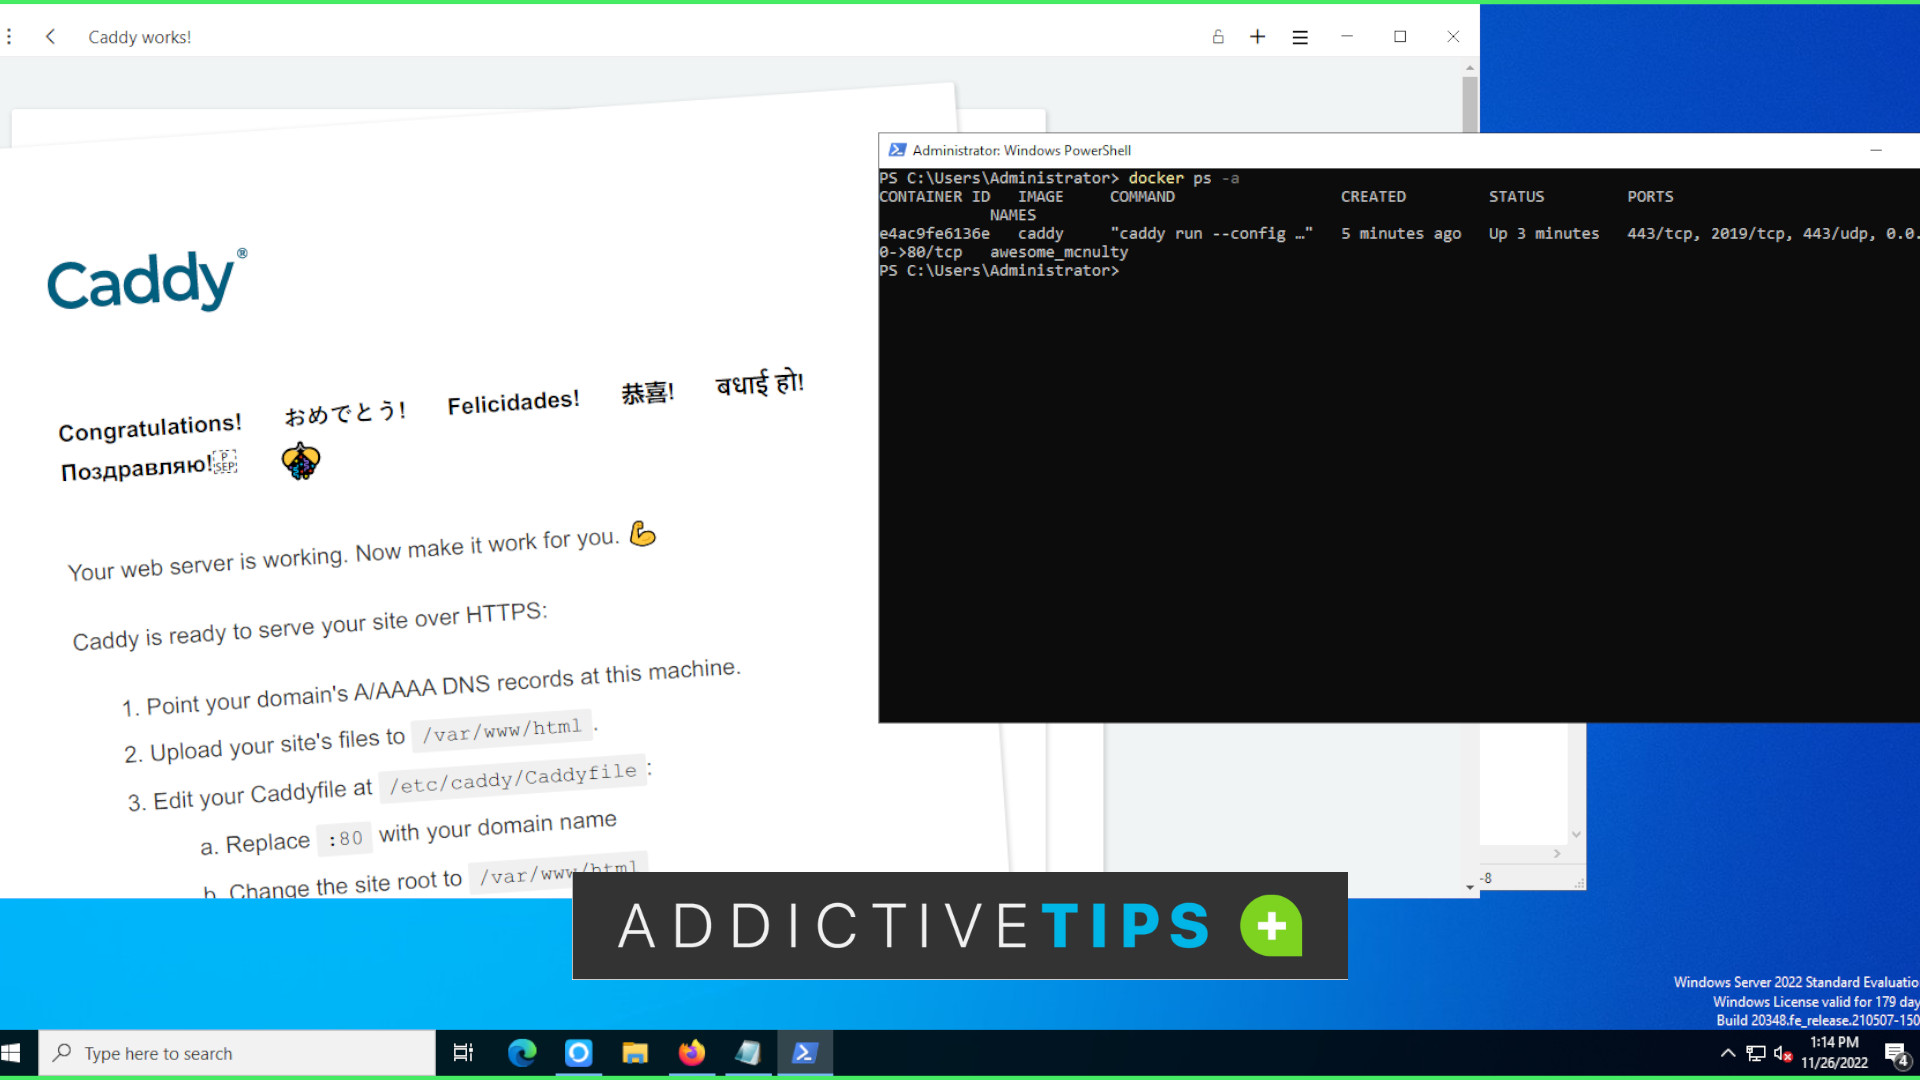 trekant shuffle pianist Run the Caddy web server on Windows Server - Addictive Tips Guide